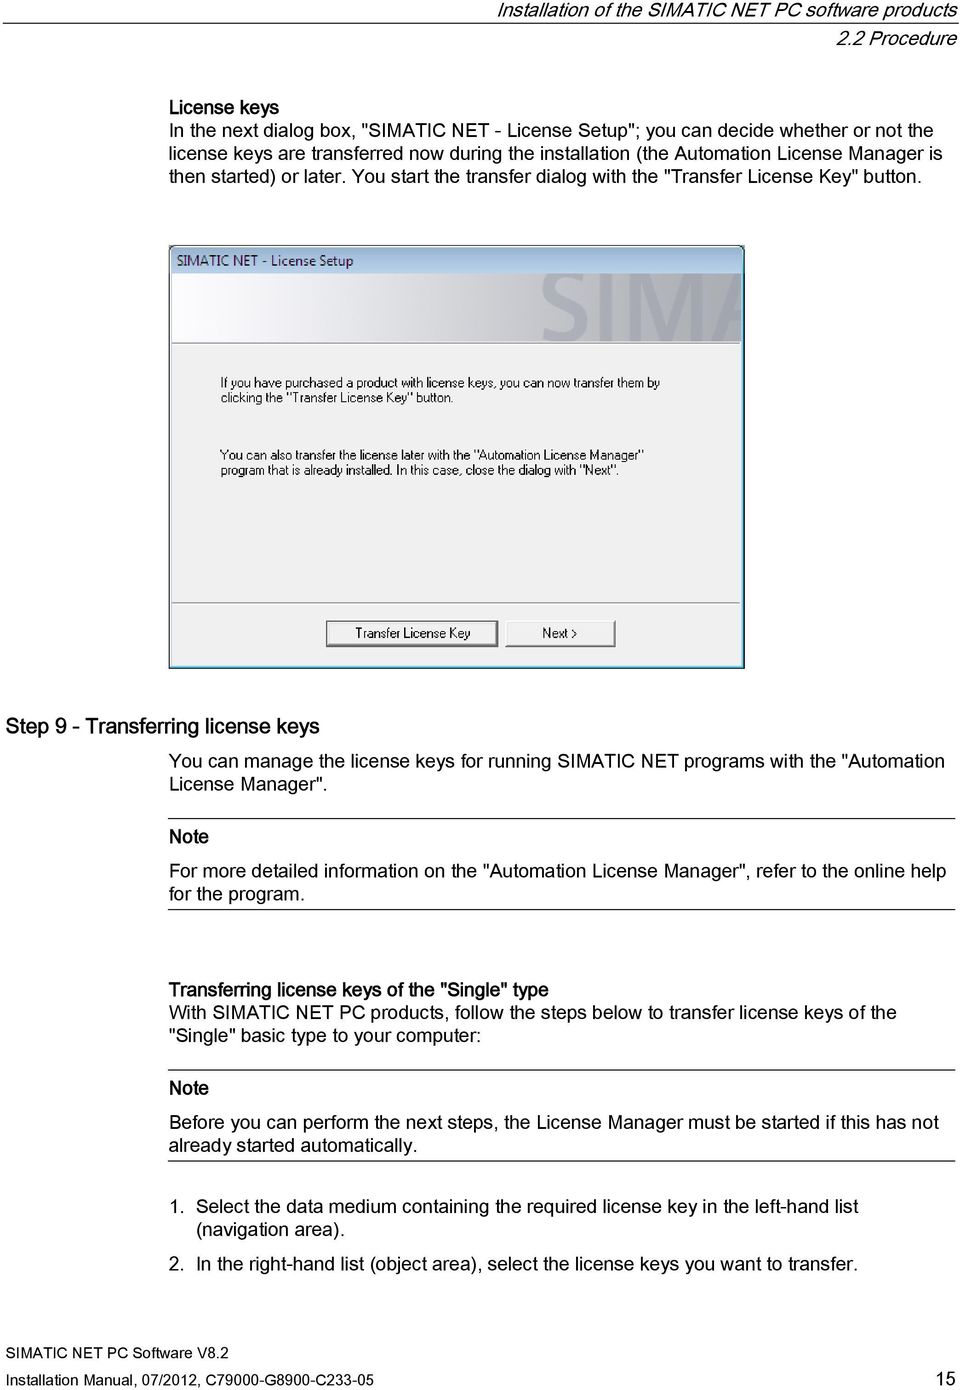 Simatic net download